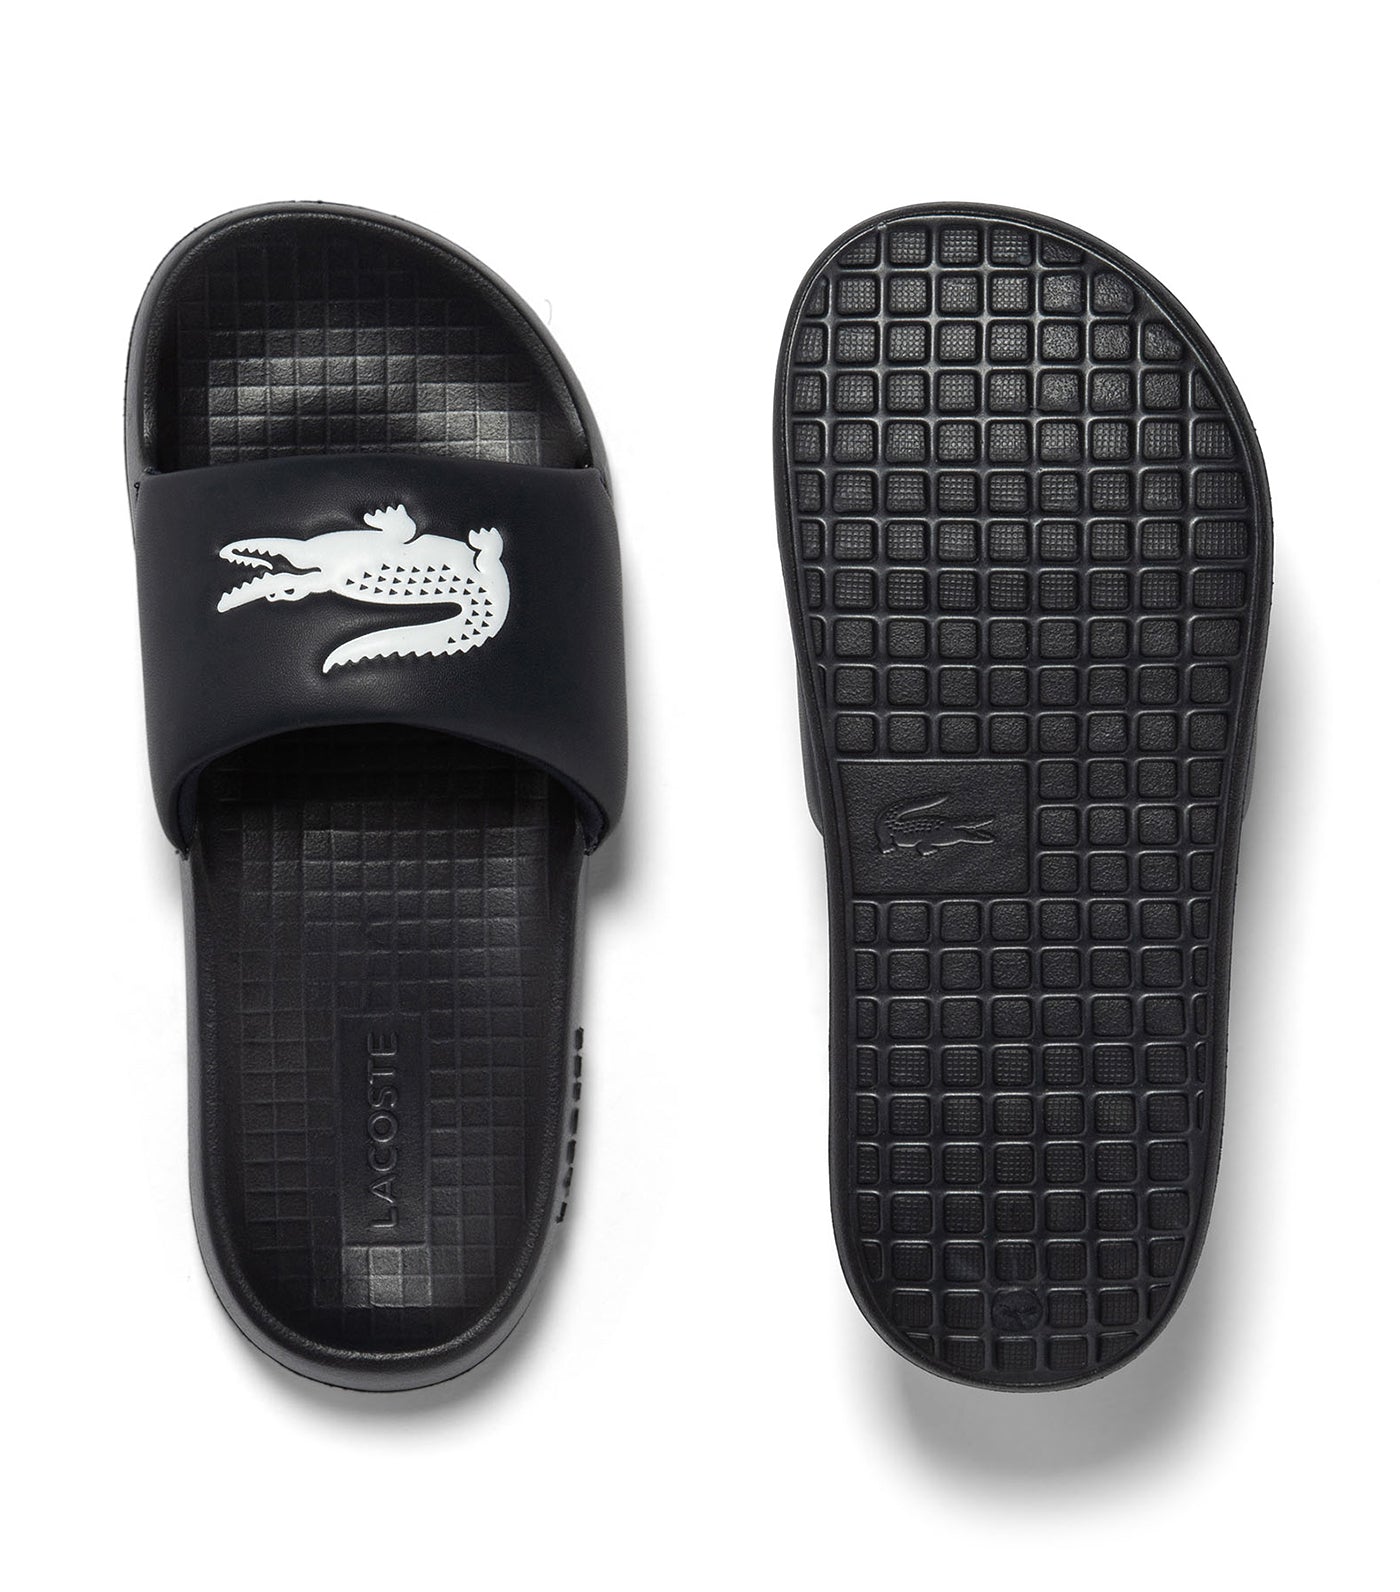 Men's Lacoste Croco 1.0 Synthetic Slides Black/White